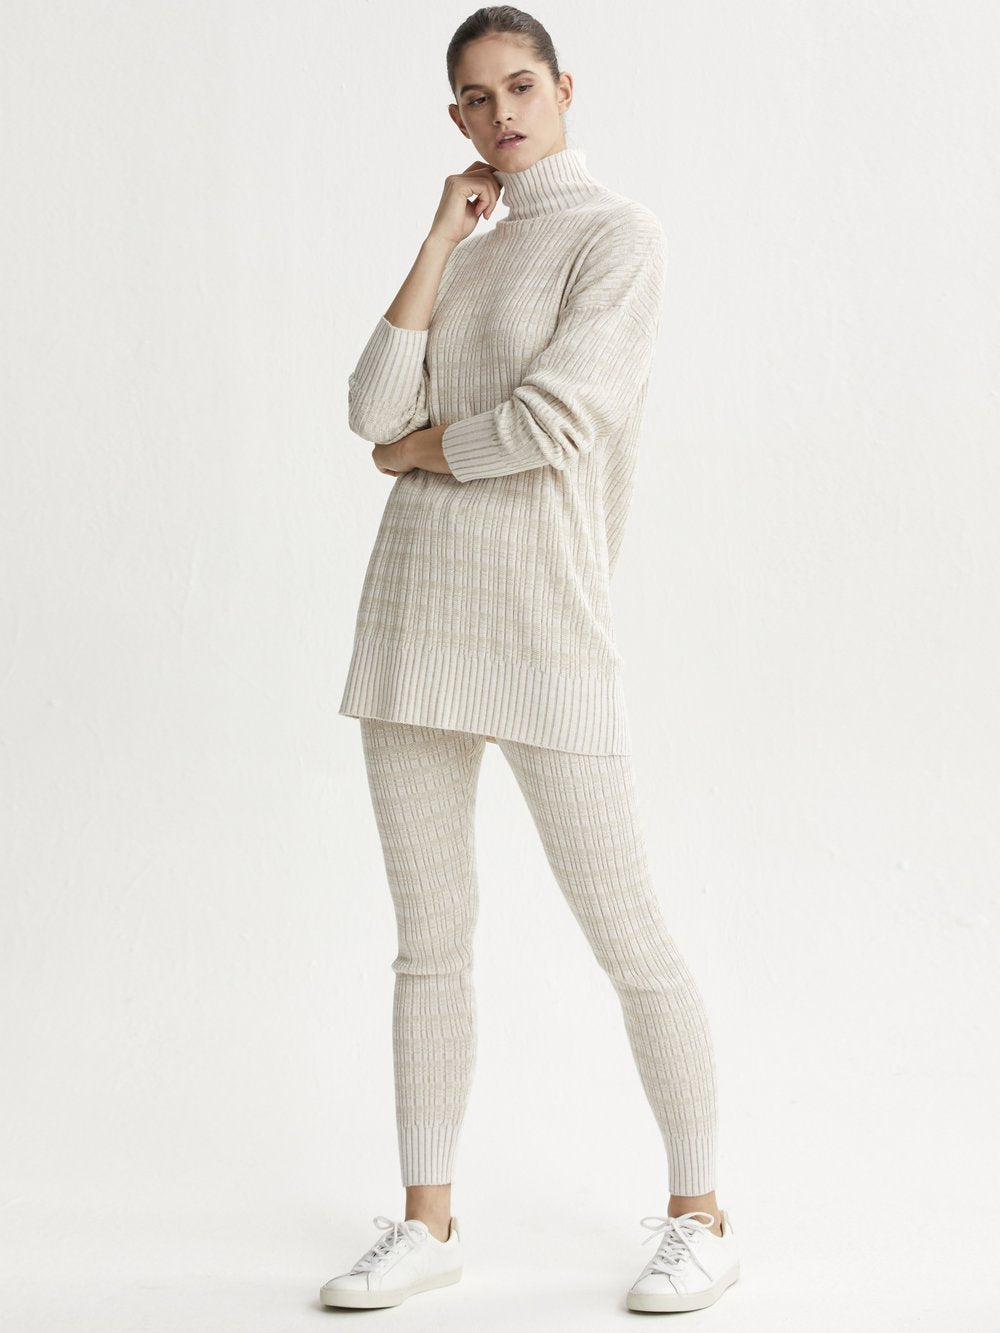 Varley Florence Sweatpants - Neutral Knit